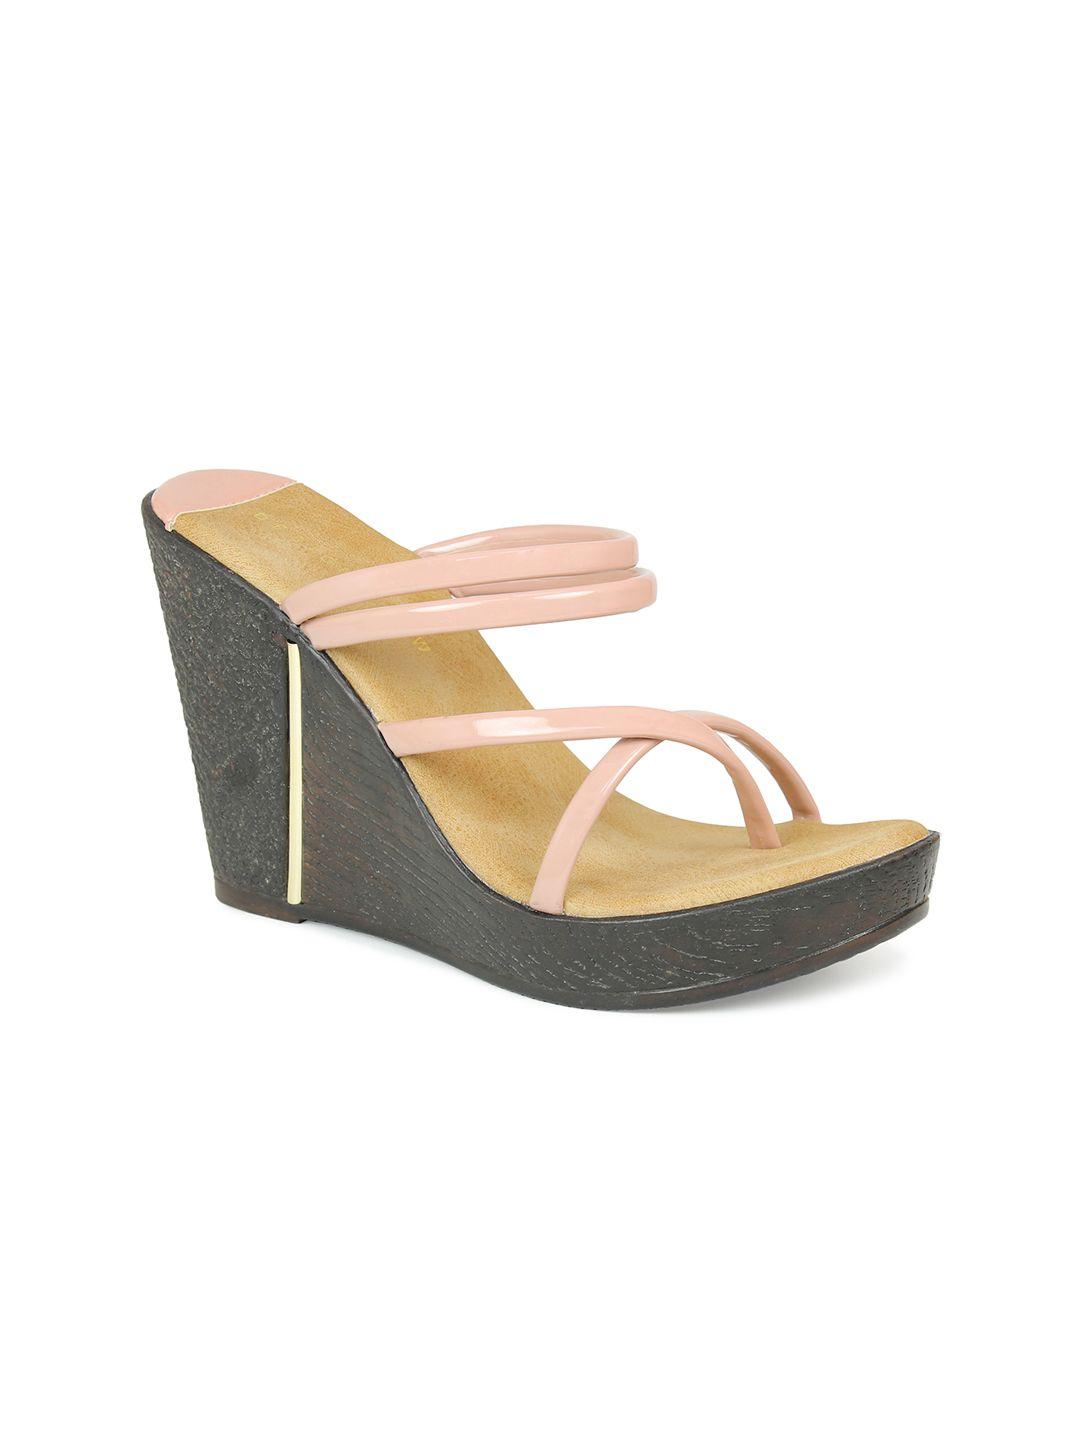 design-crew-peach-coloured-solid-wedge-heels